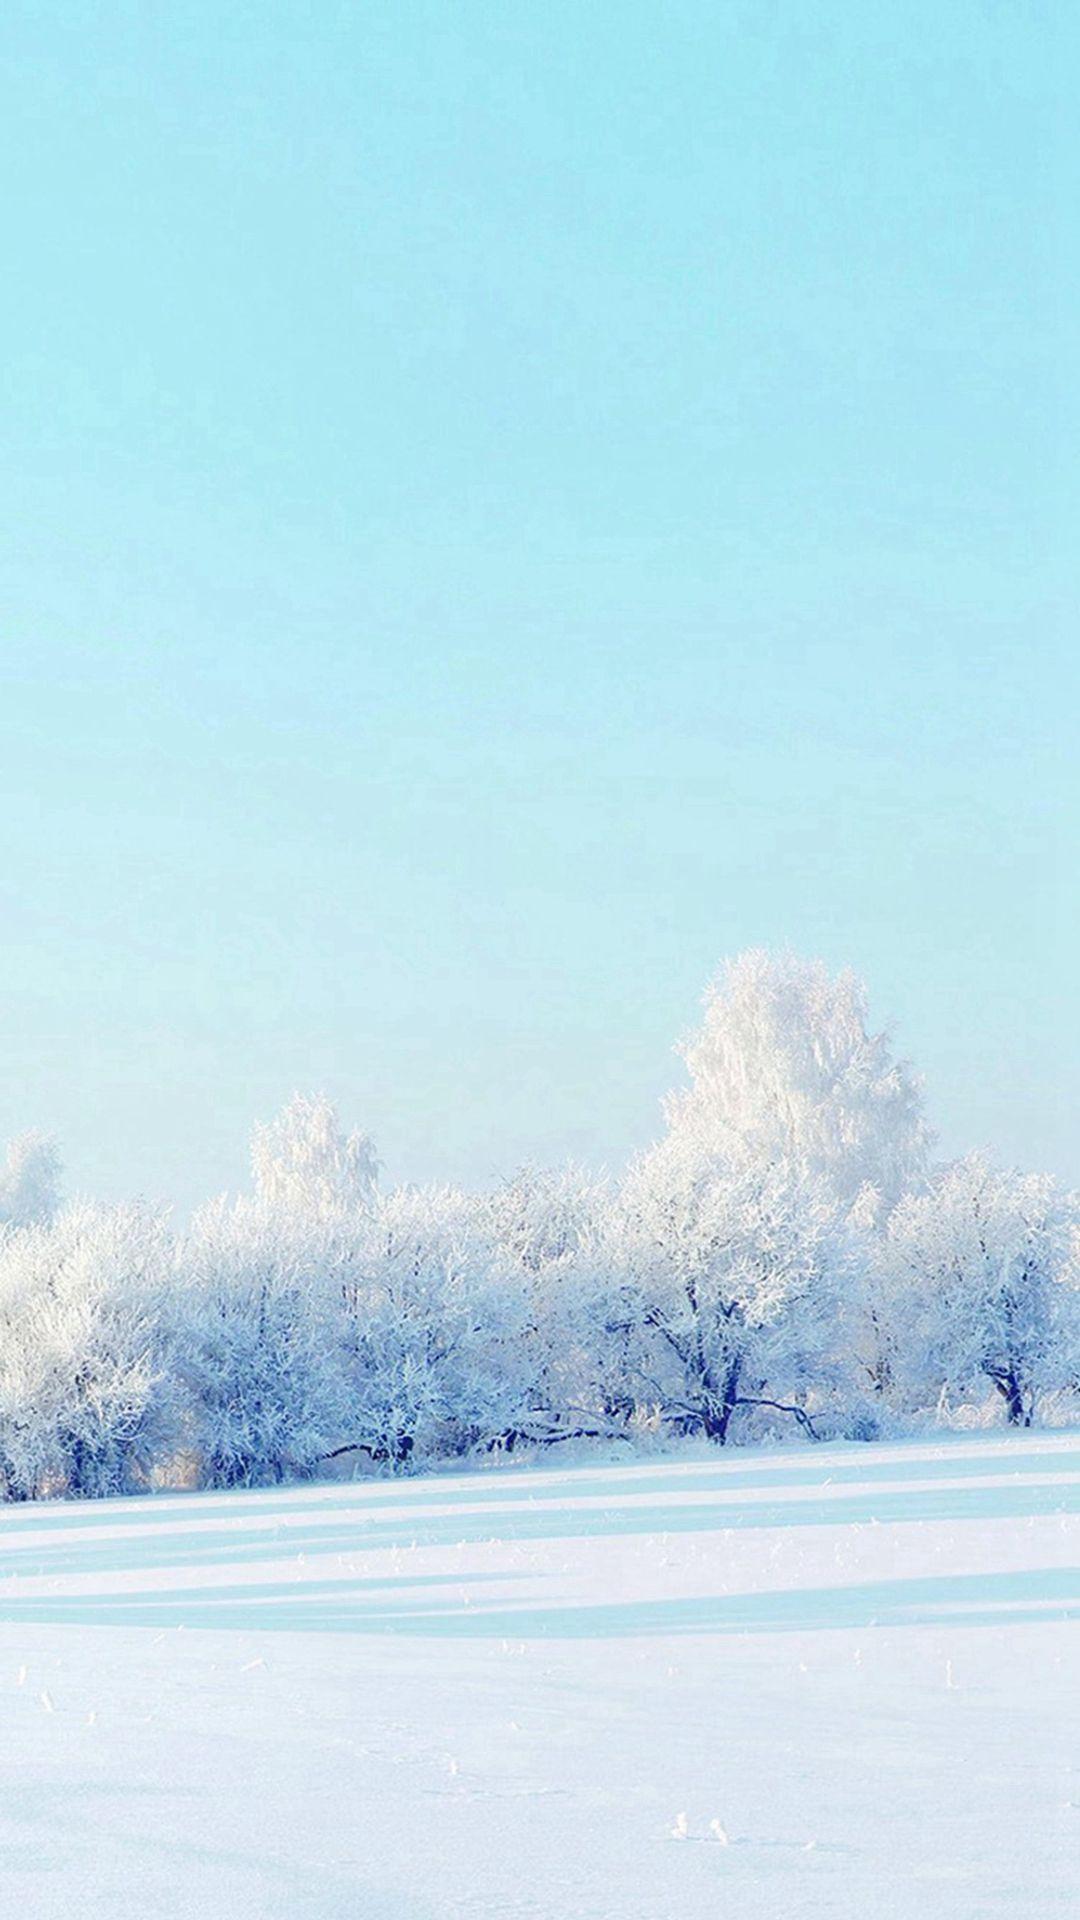 Pure Winter Static Snow Field White World iPhone 8 Wallpaper Free